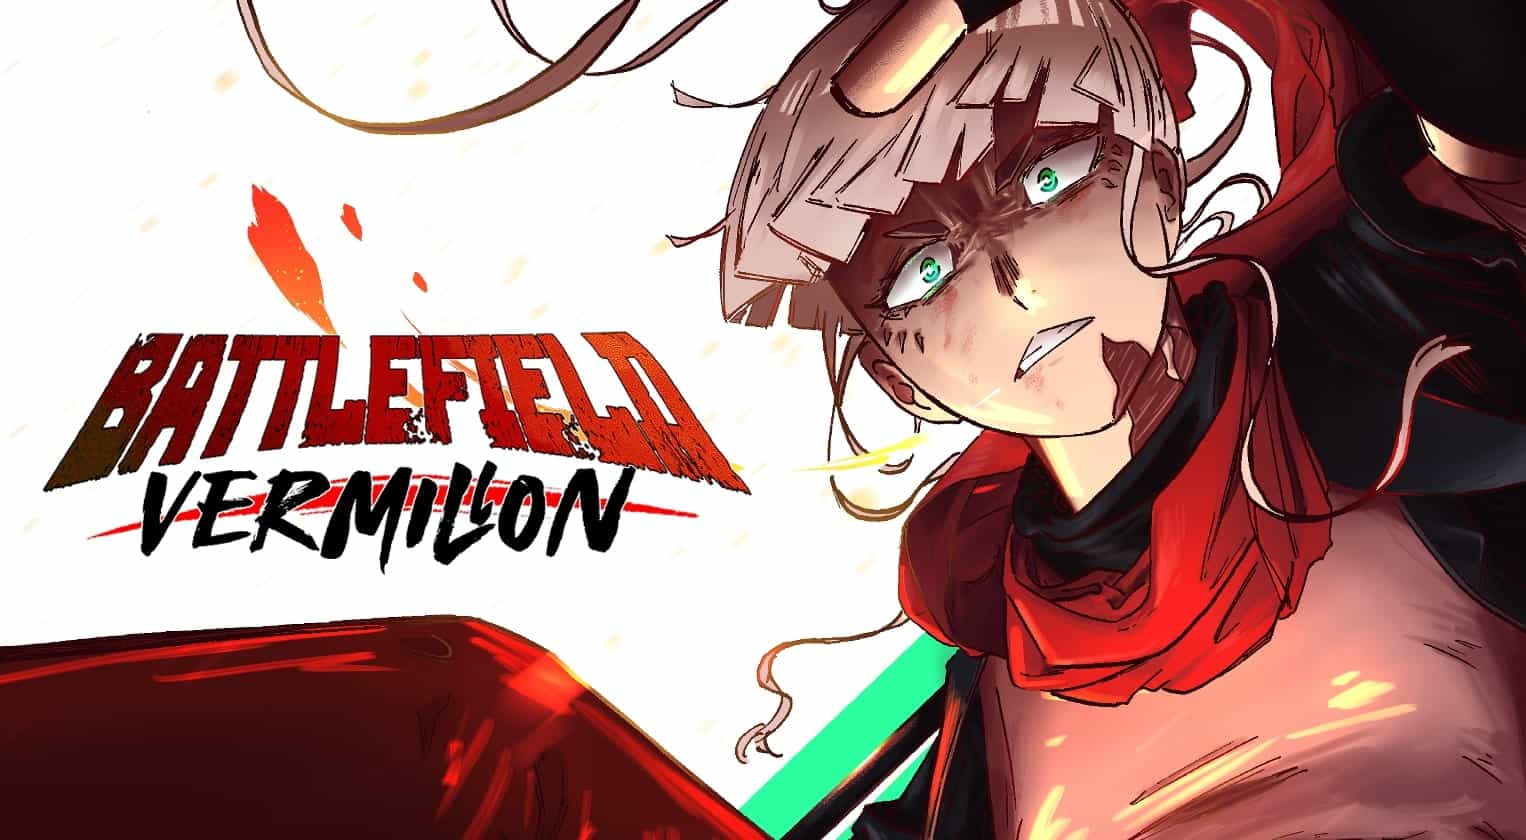 Battlefield Vermillon - Scan manga gratuit en ligne manga scan gratuit bayday